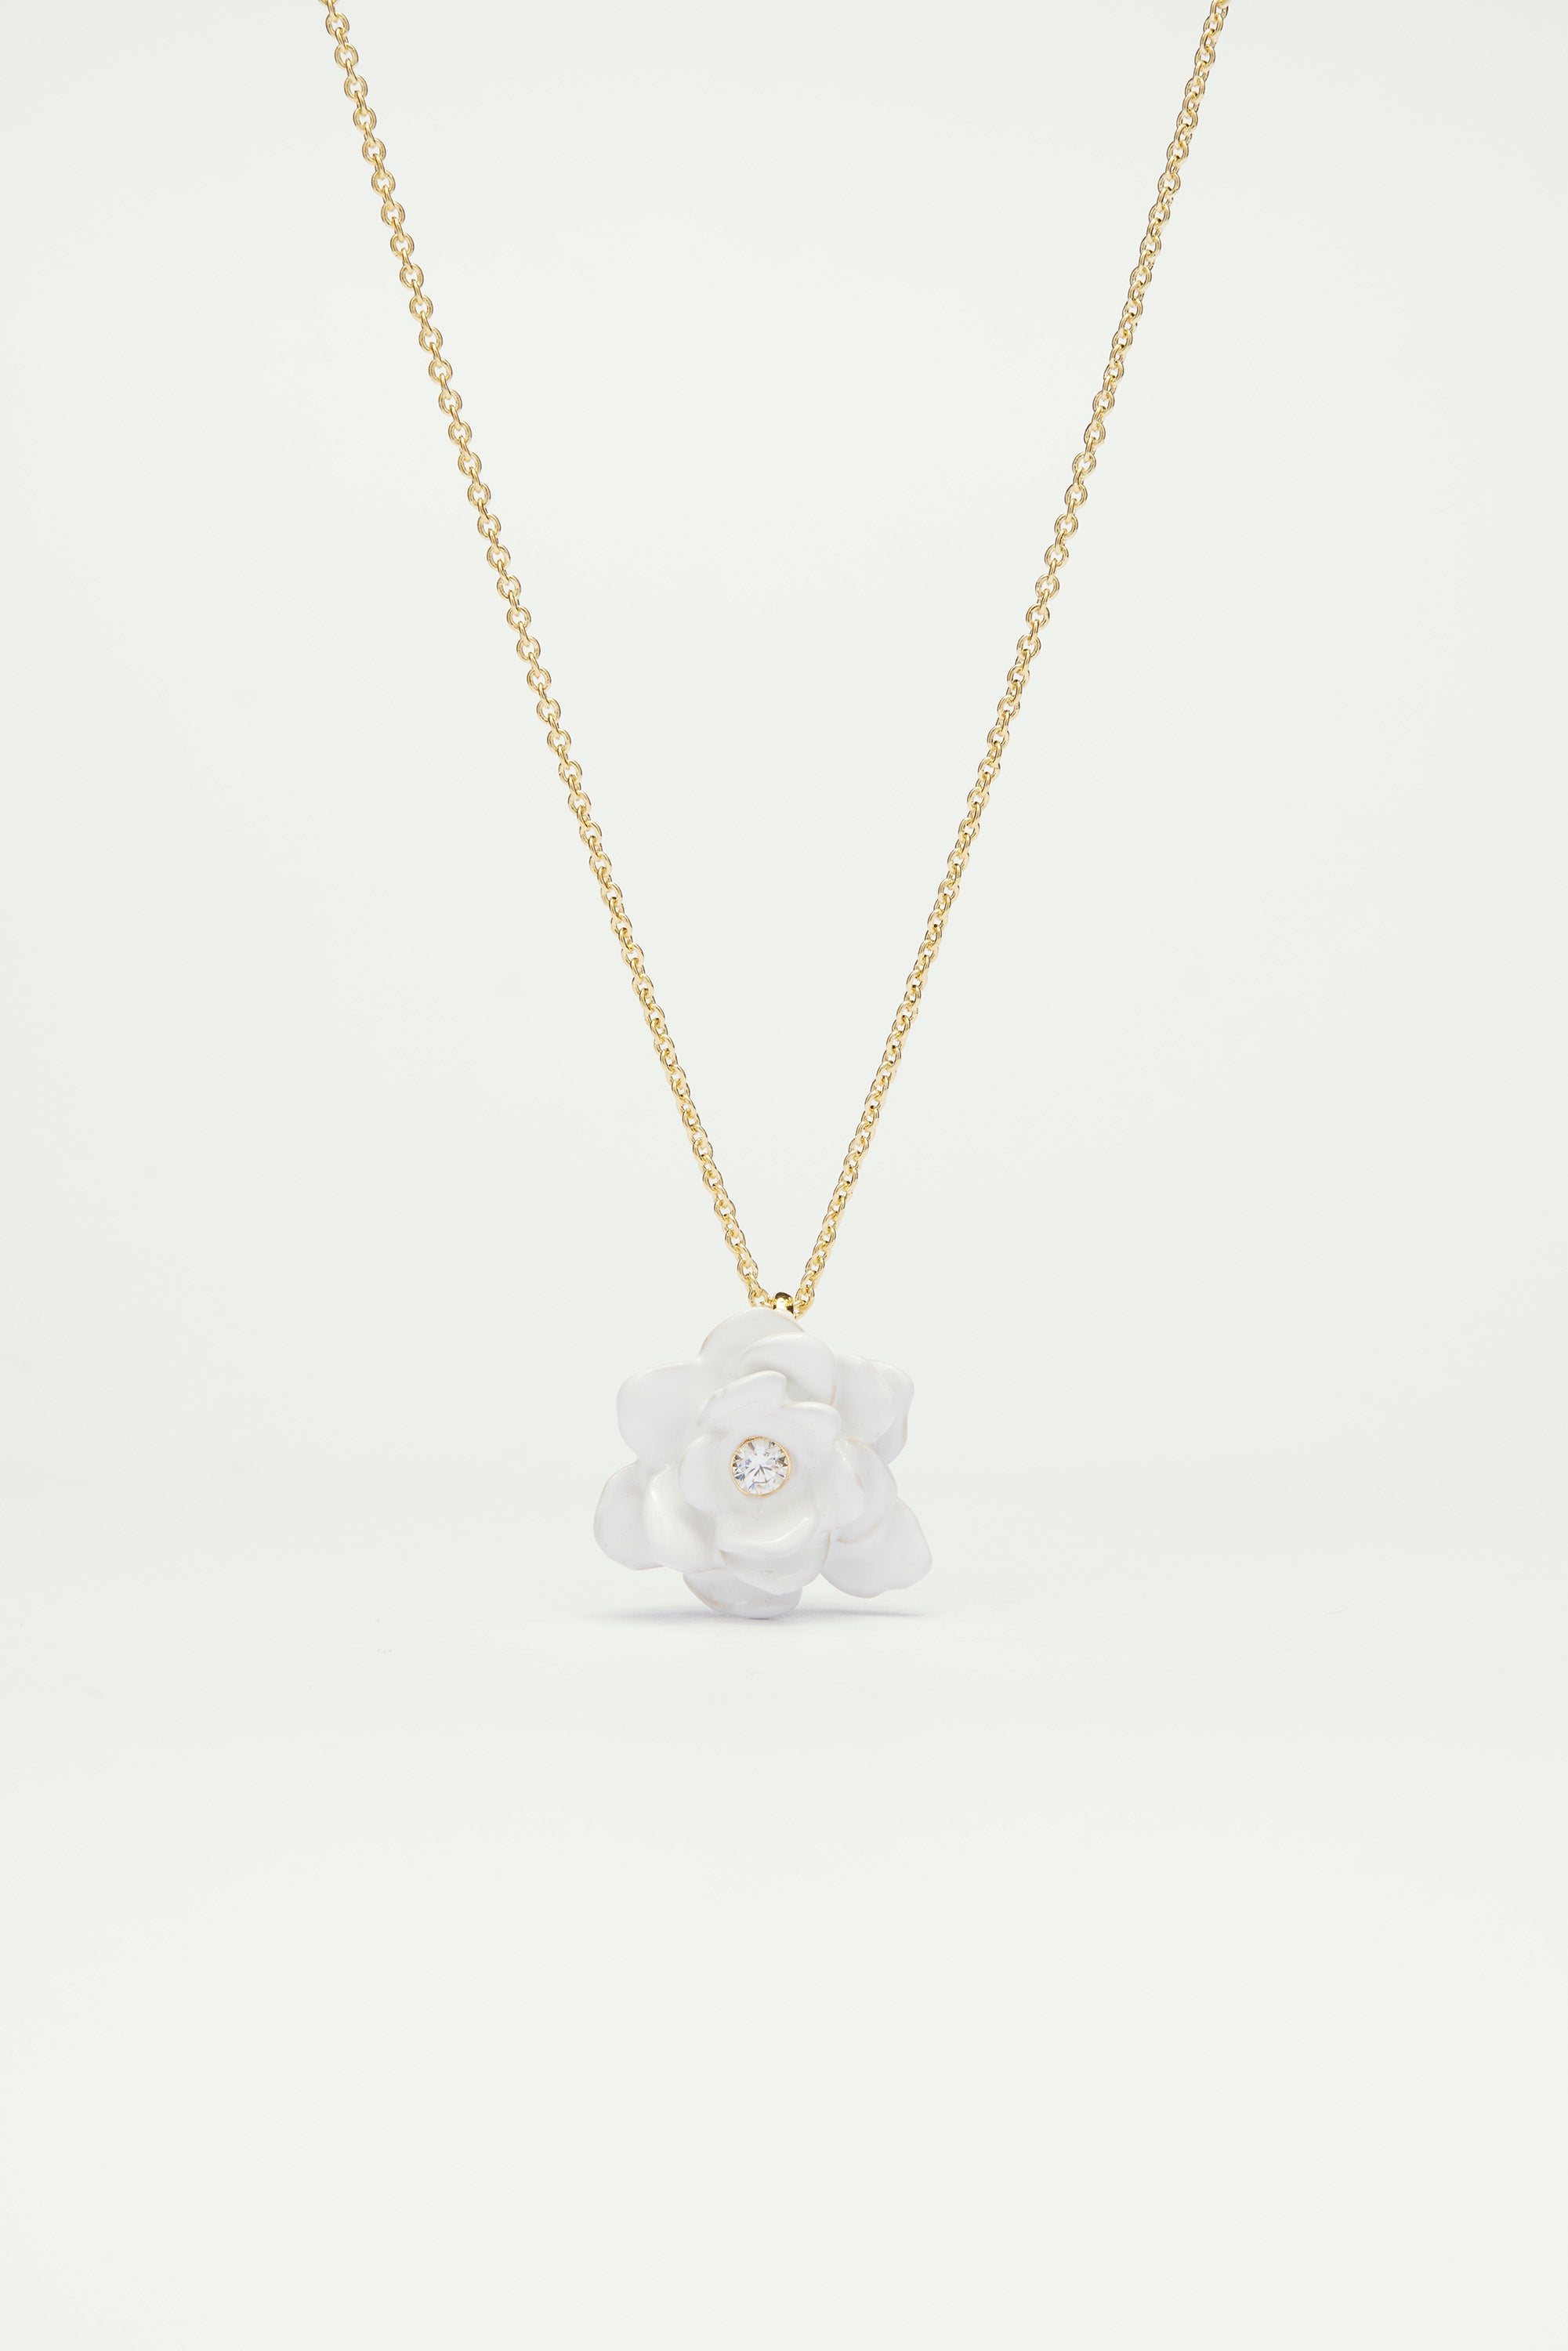 Gardenia and cut glass stone fine necklace